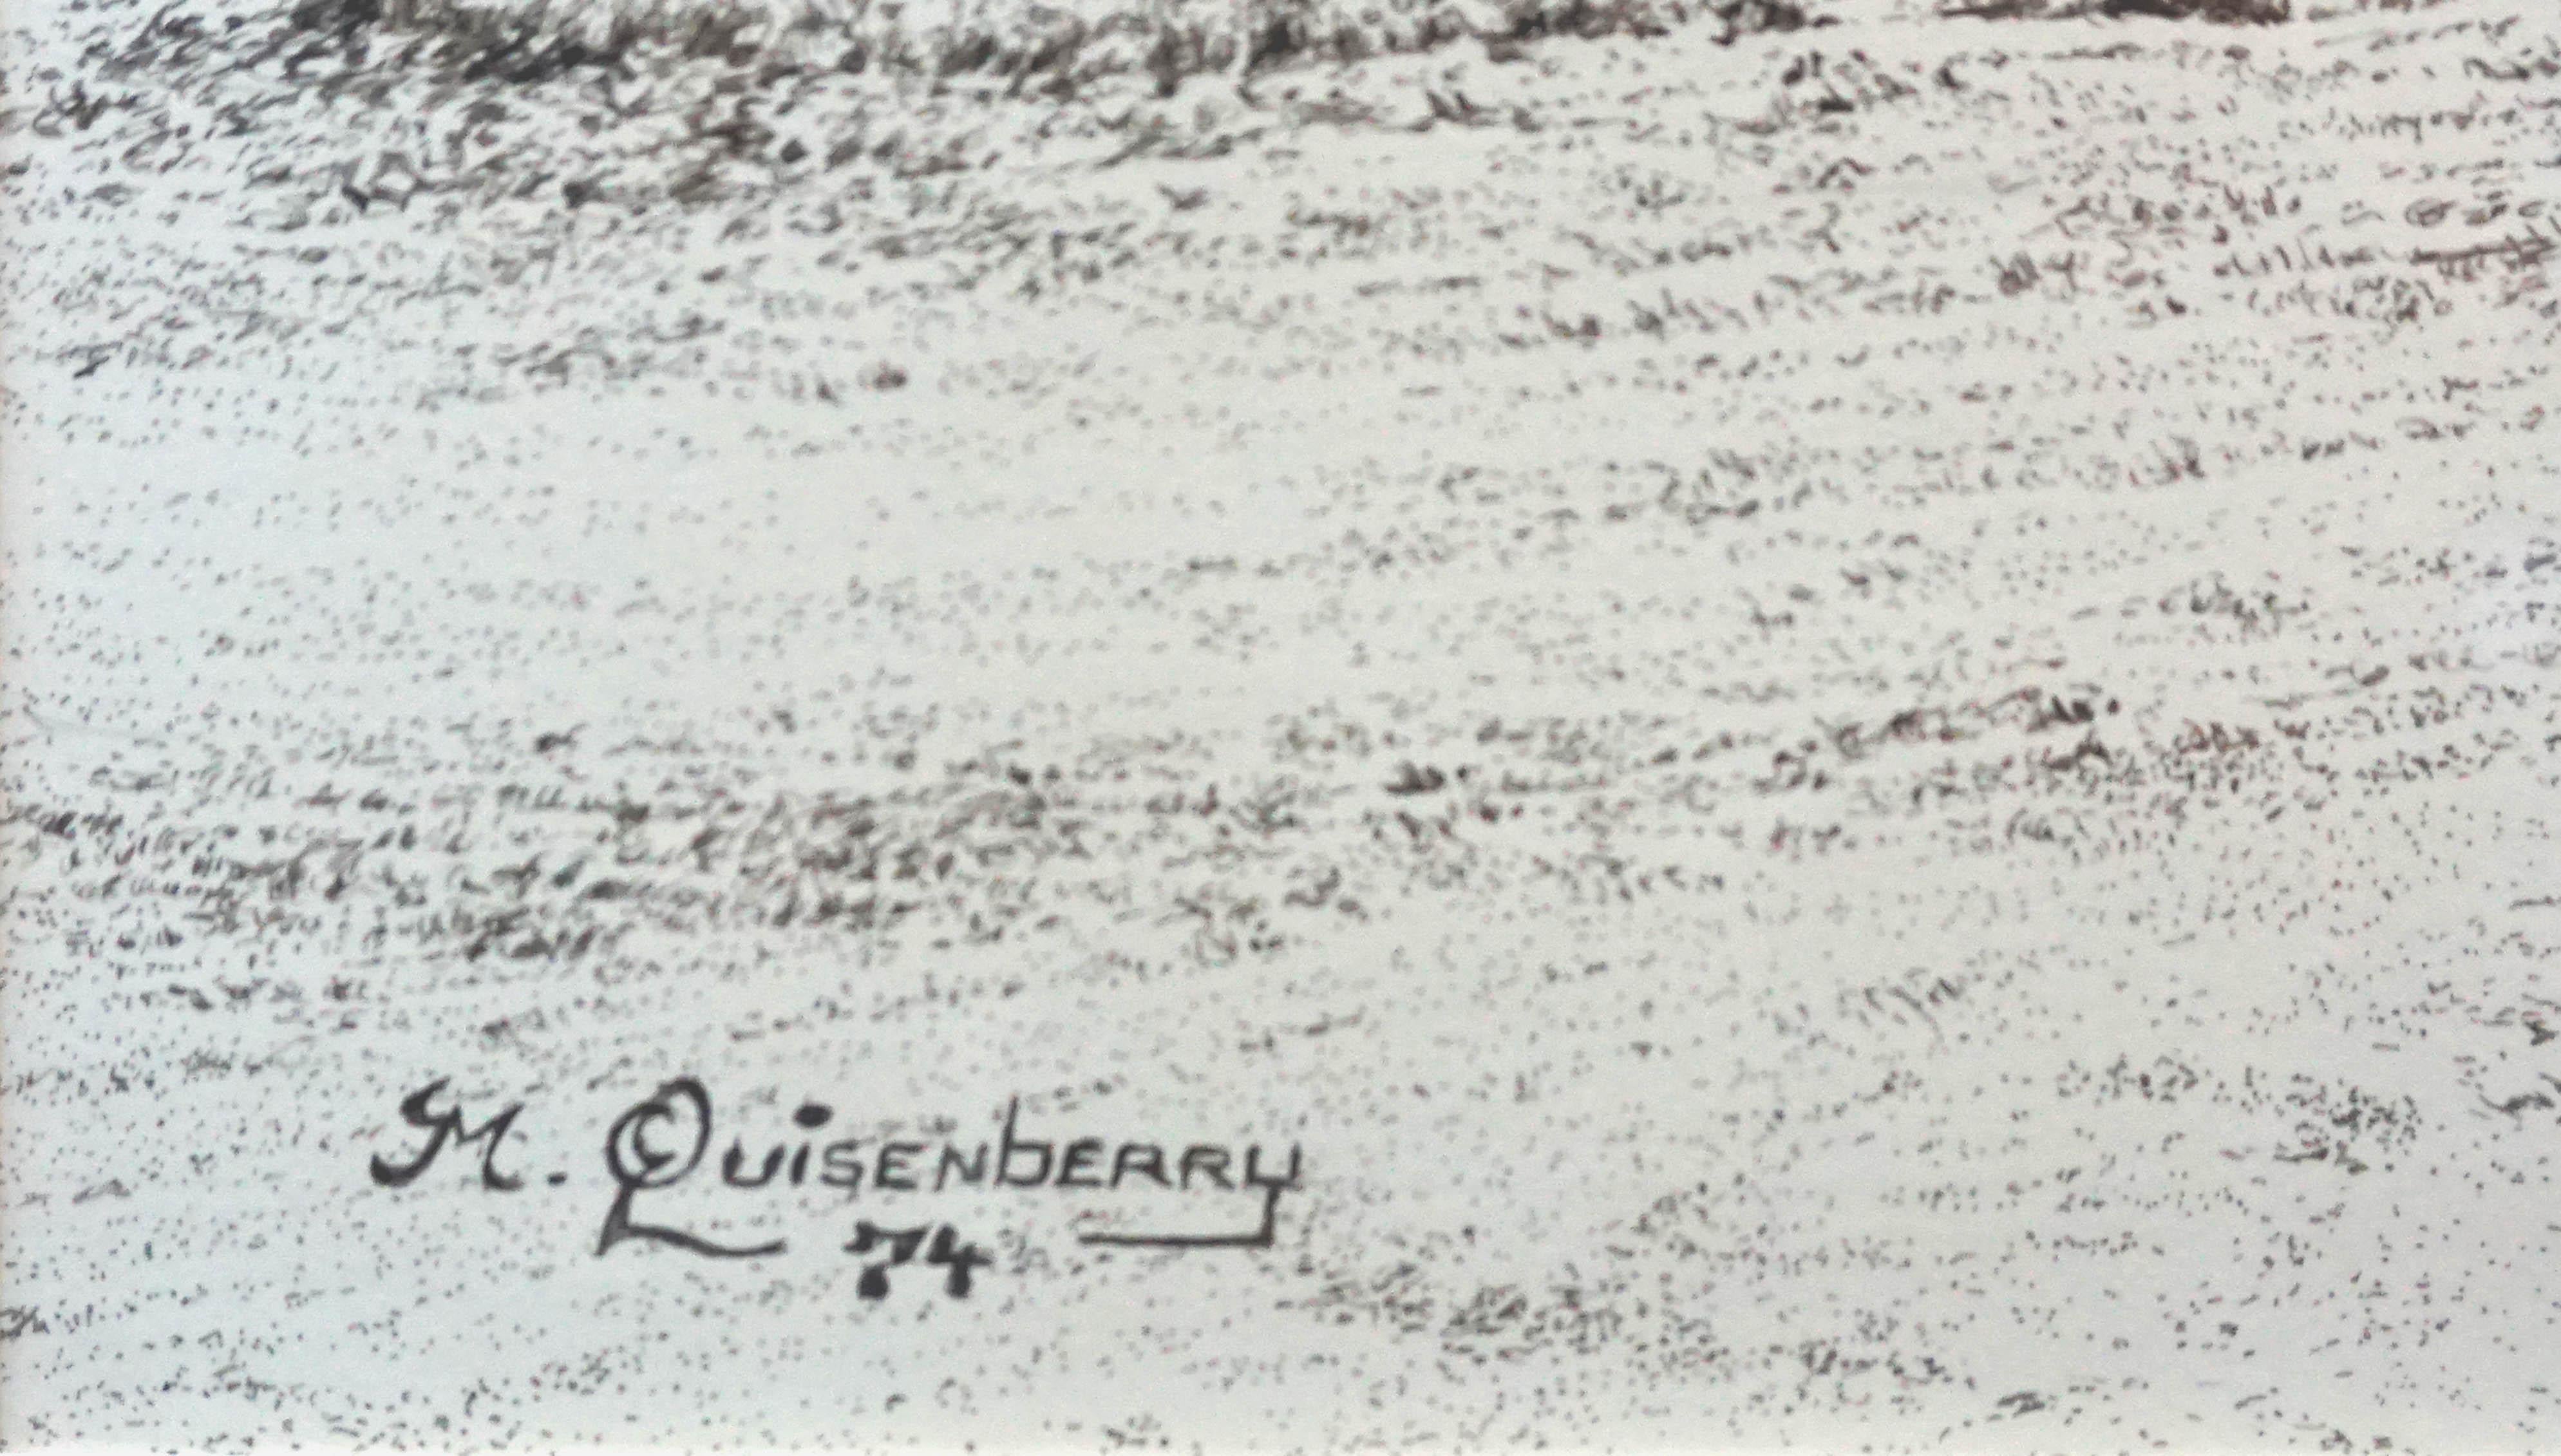 michael quisenberry